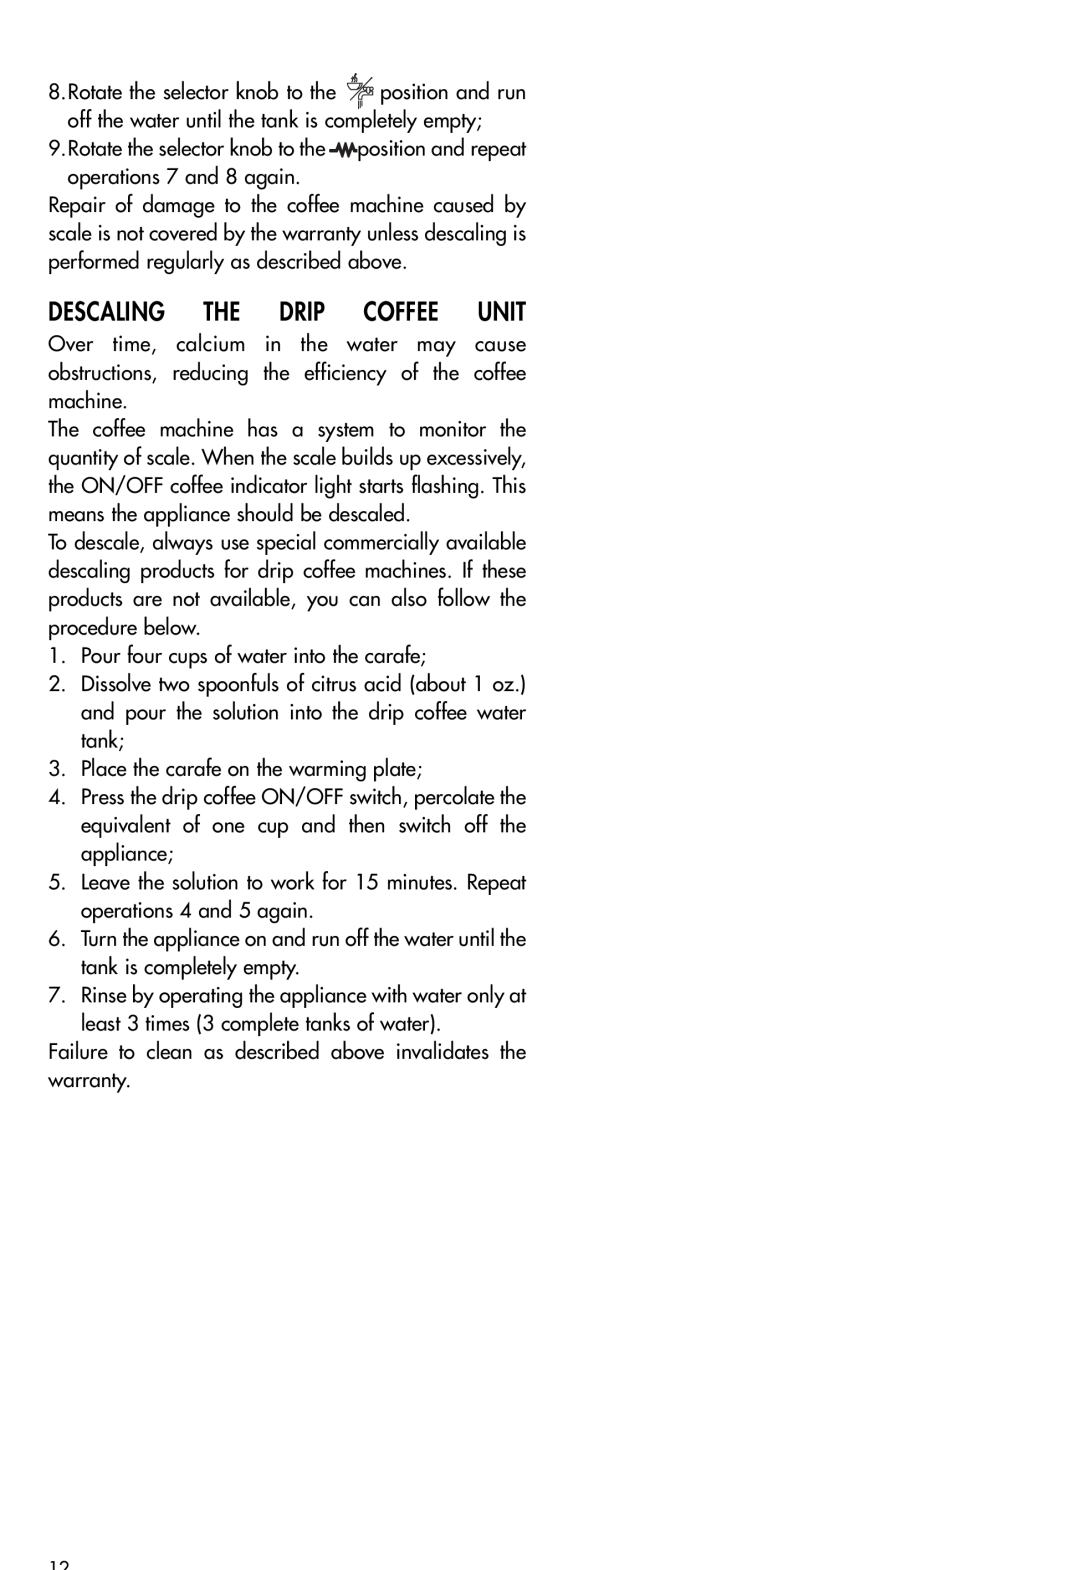 DeLonghi BCO264B manual Descaling The Drip Coffee Unit 